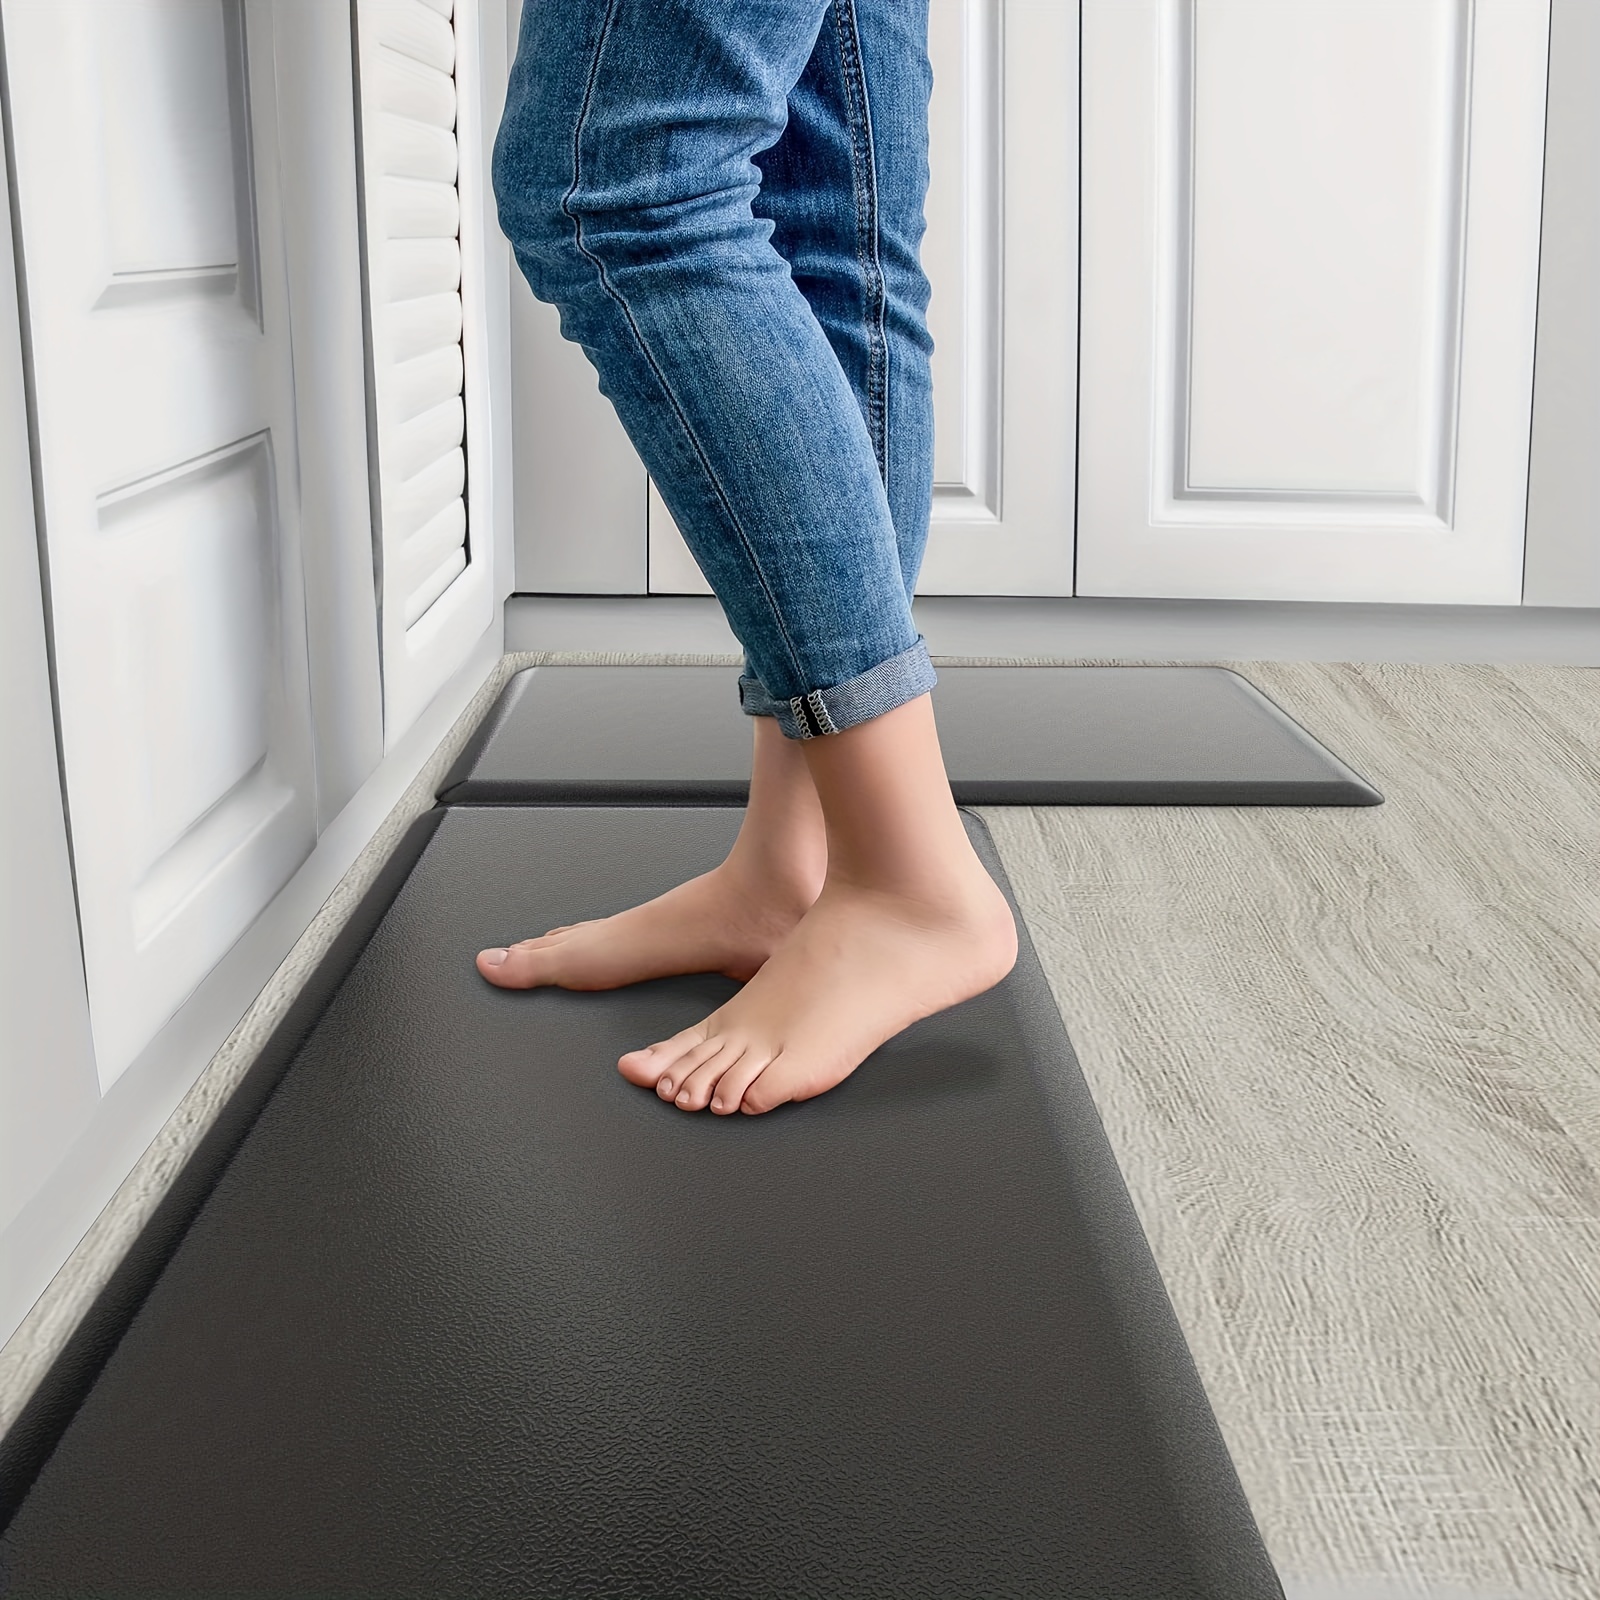 Kitchen Mat Cushioned Comfort Anti-Fatigue Floor Mat, Waterproof